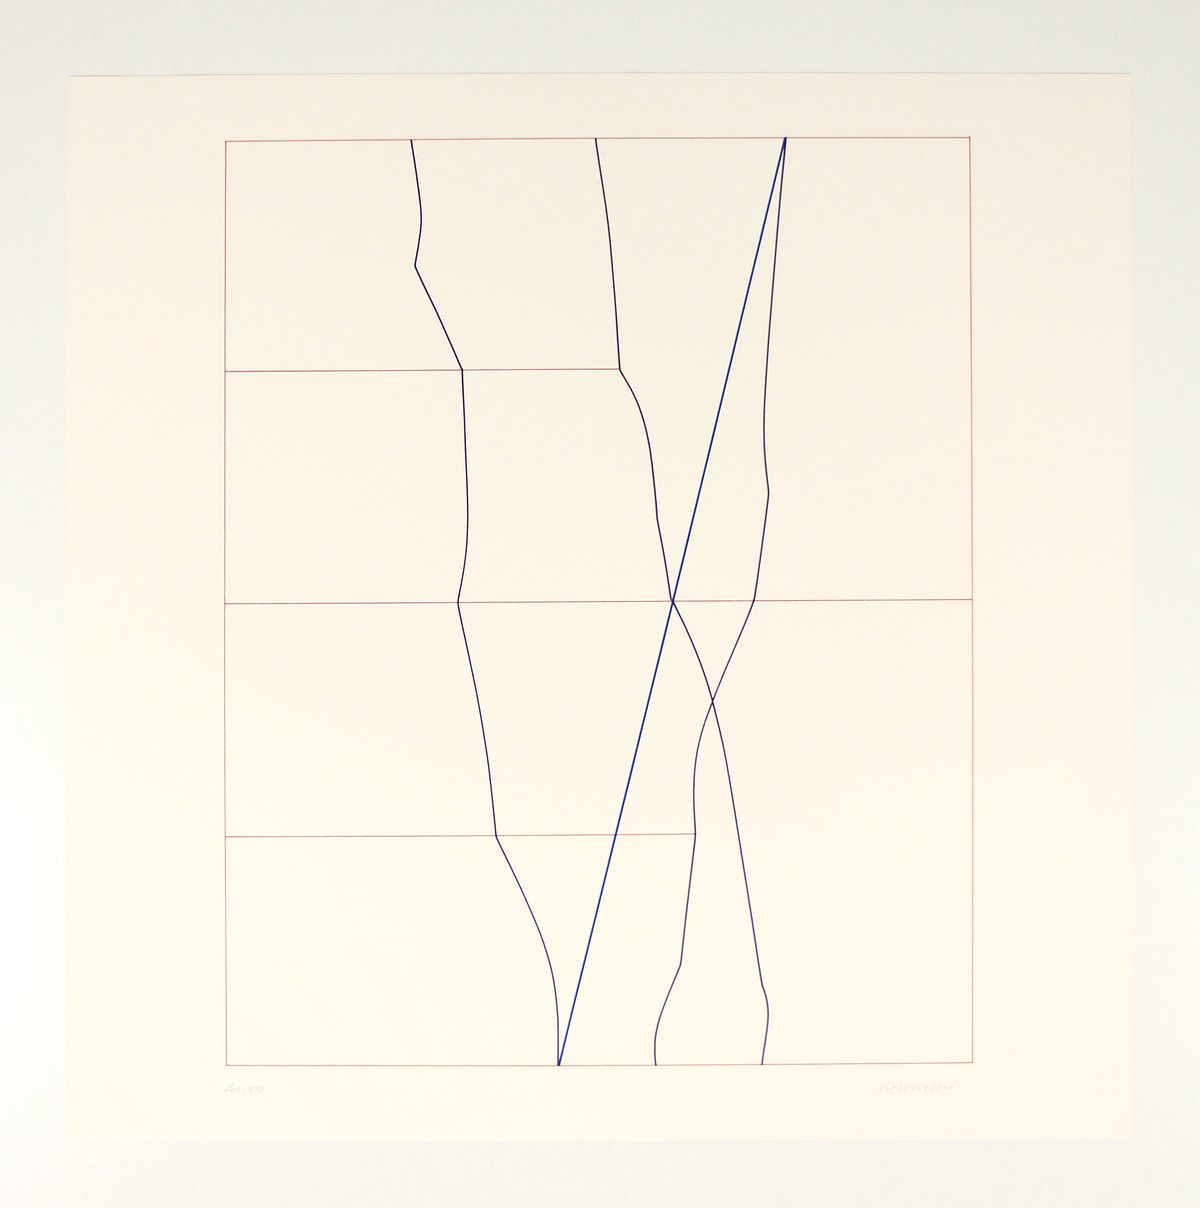 hans joachim albrecht, &quot;untitled&quot; (1996), silk screen on laid paper, 60 x 60 cm